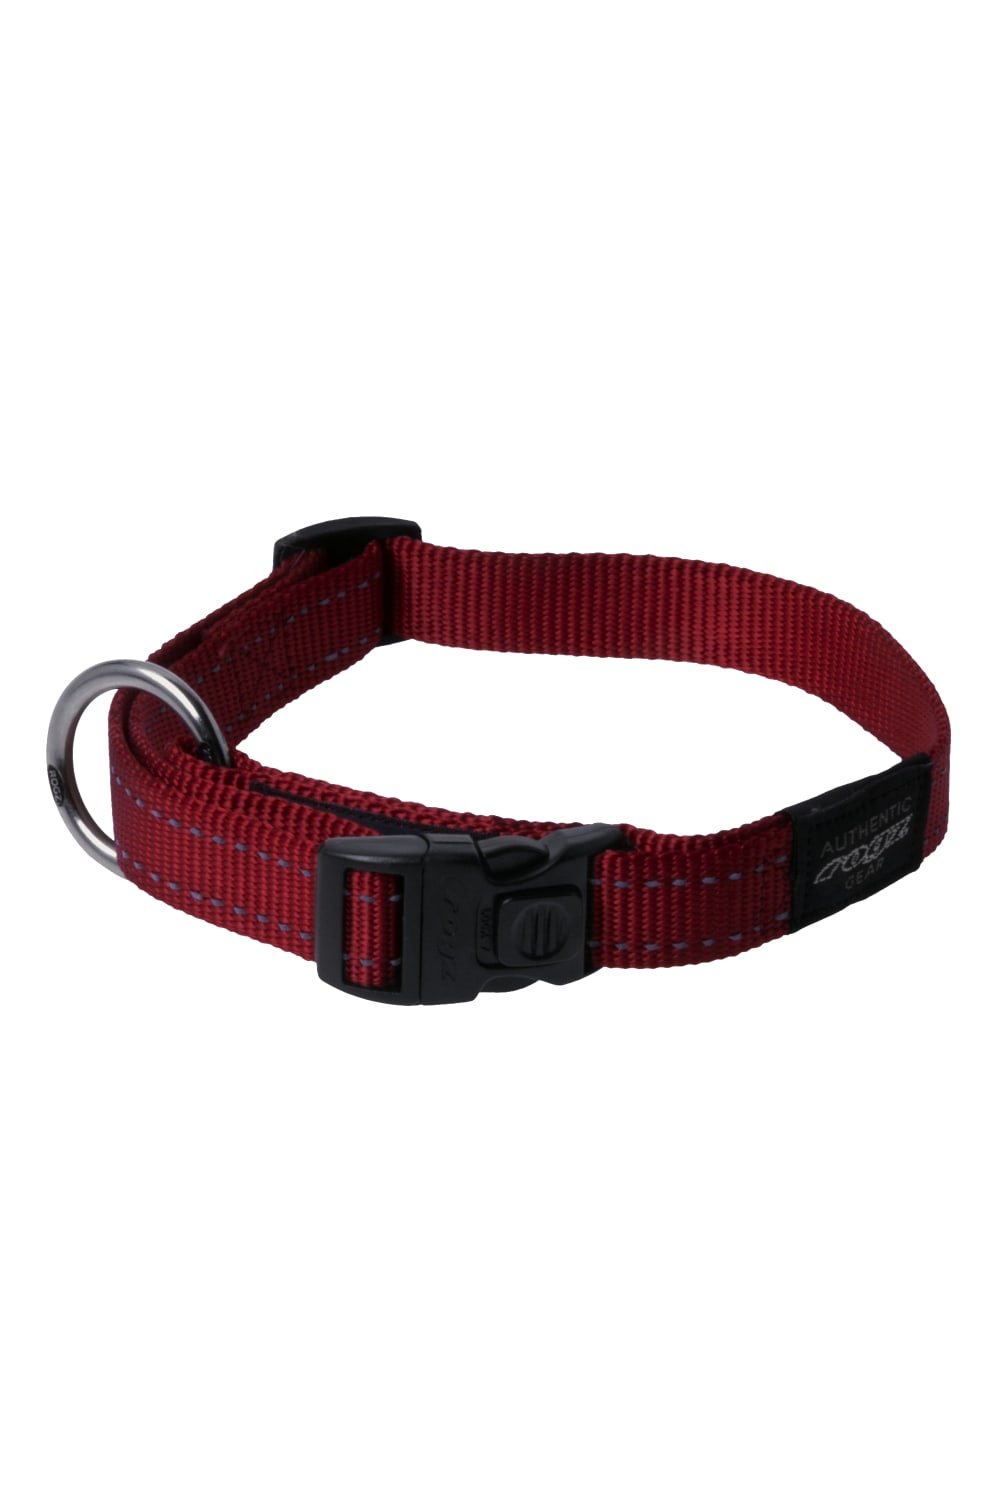 Rogz Utility Side Release Adjustable Dog Collar (Red) (Medium)